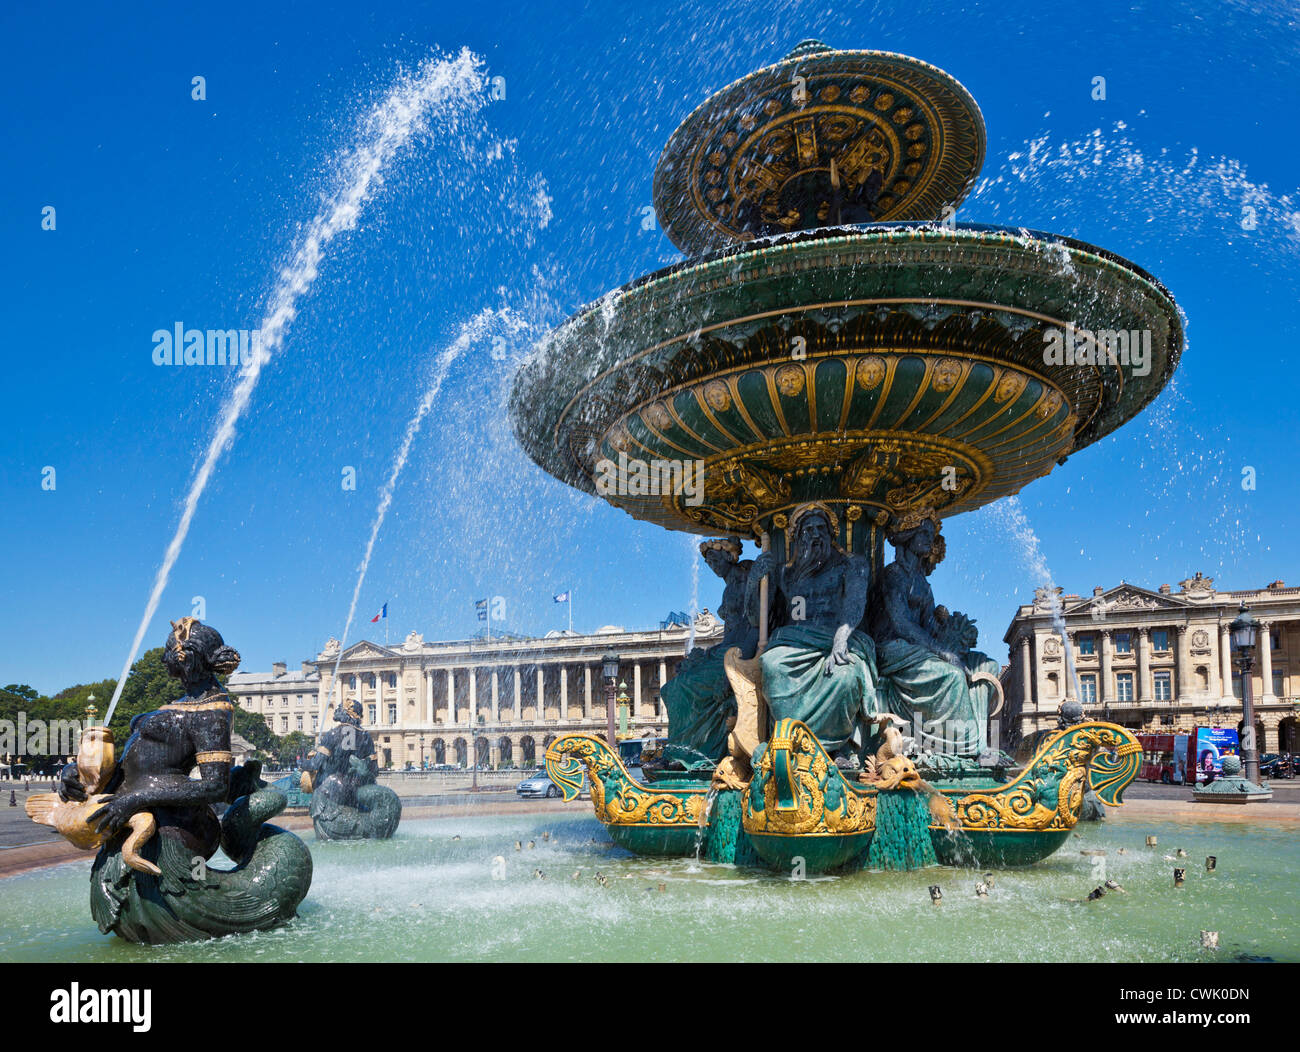 Fountains in the Place de la Concorde at the end of the Avenue des Champs Elysees Paris France EU Europe Stock Photo